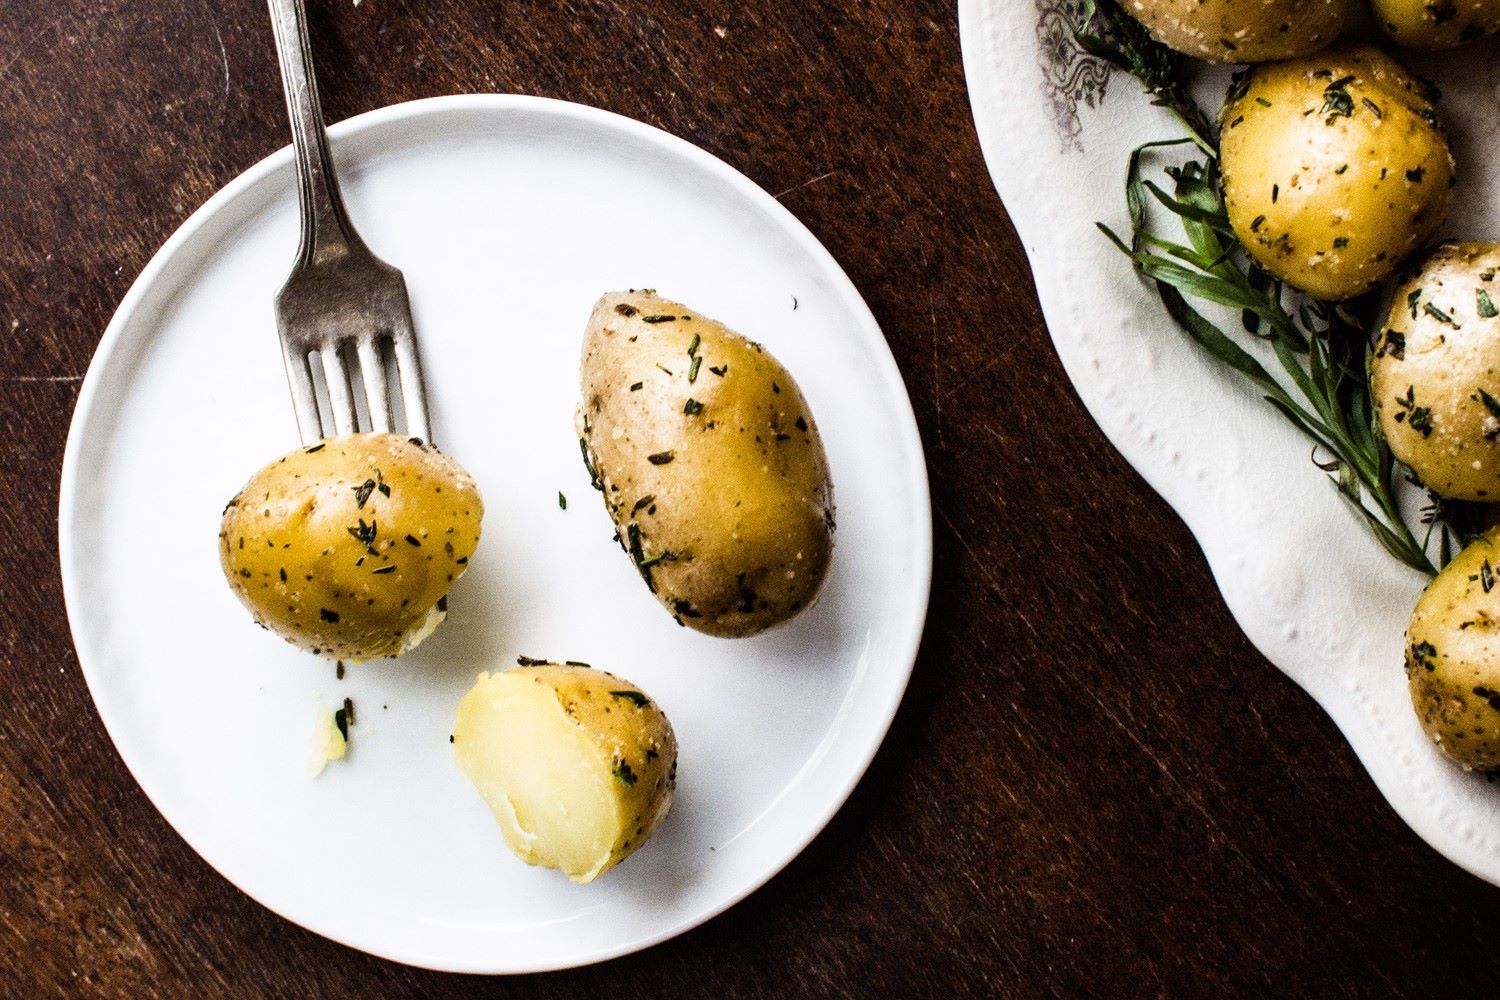 potato recipes to try, duck fat potatoes